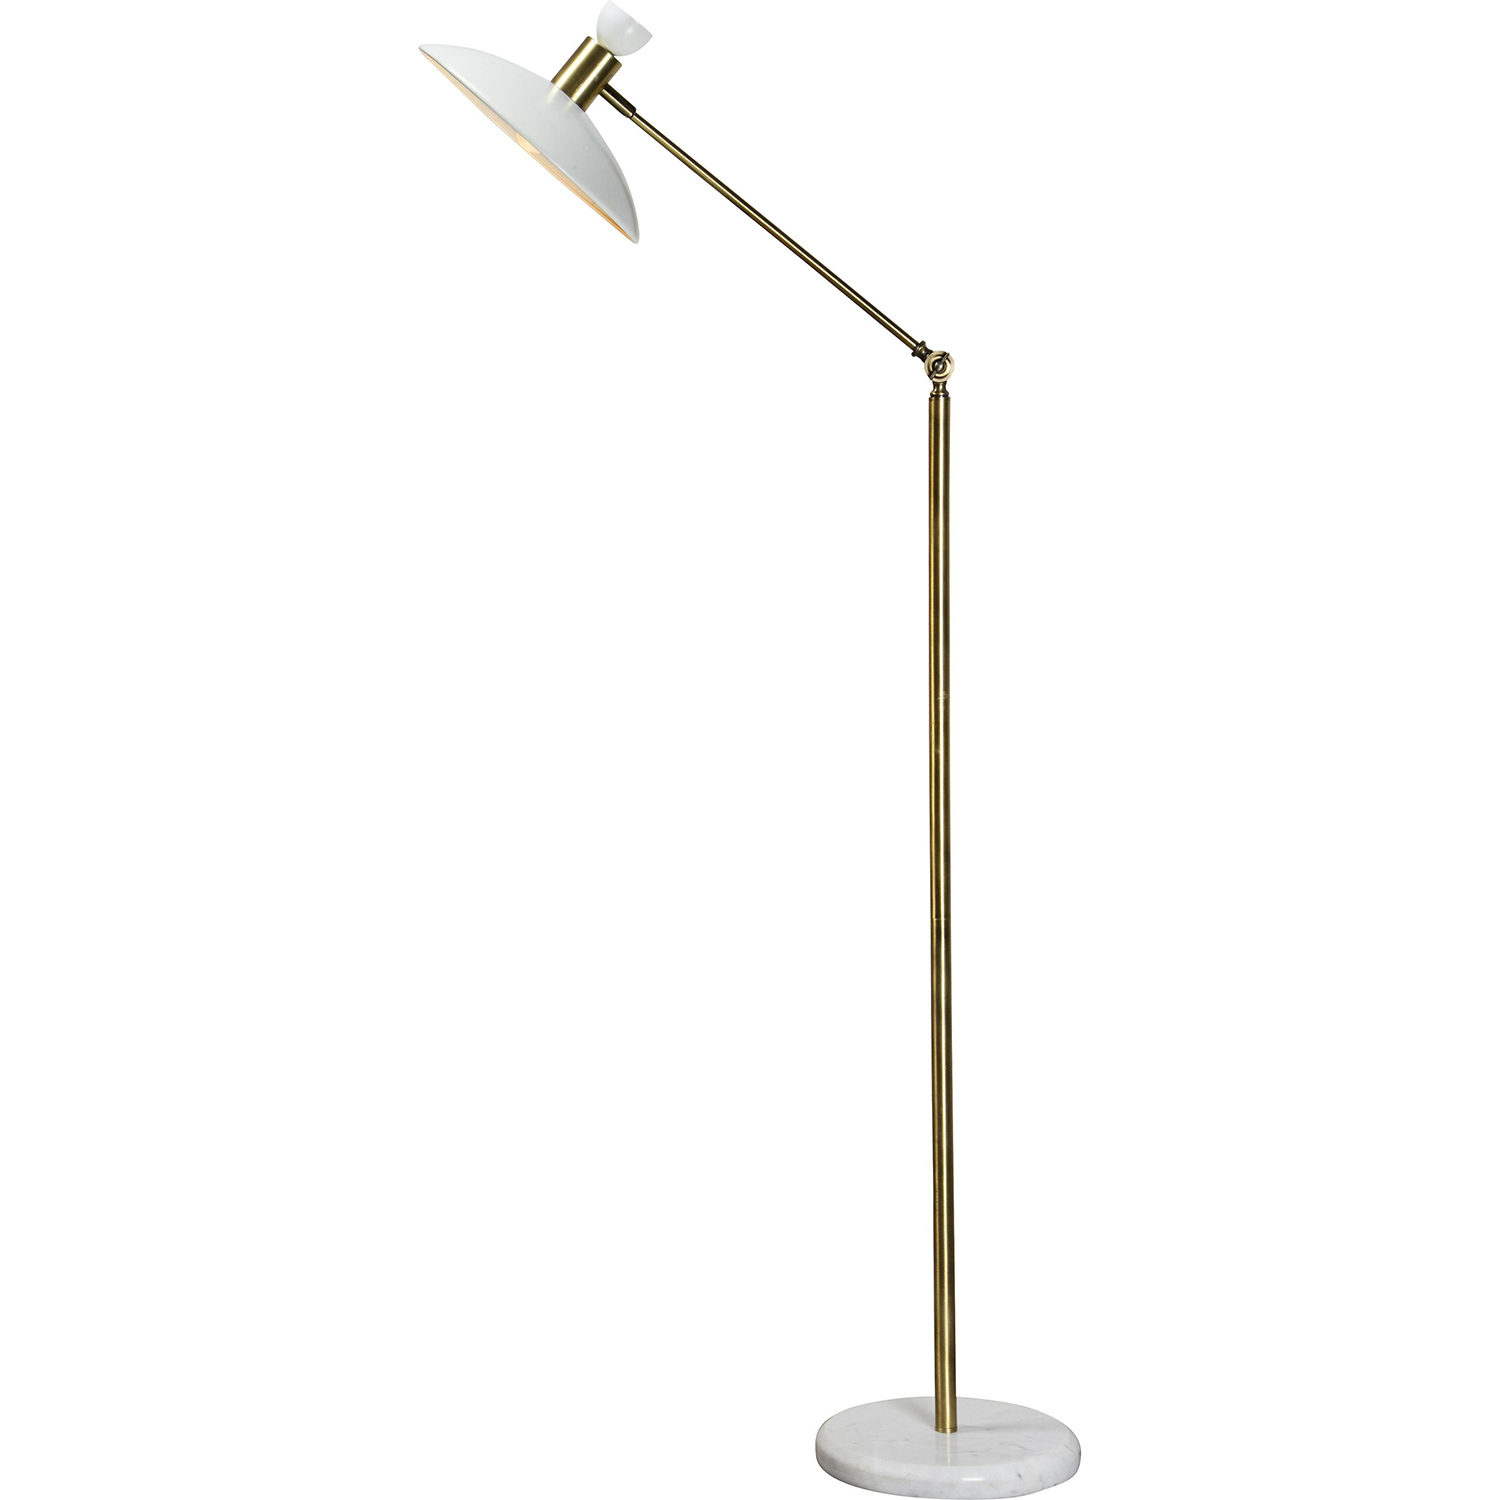 Ren-Wil Troilus Floor Lamp - Polished Brass